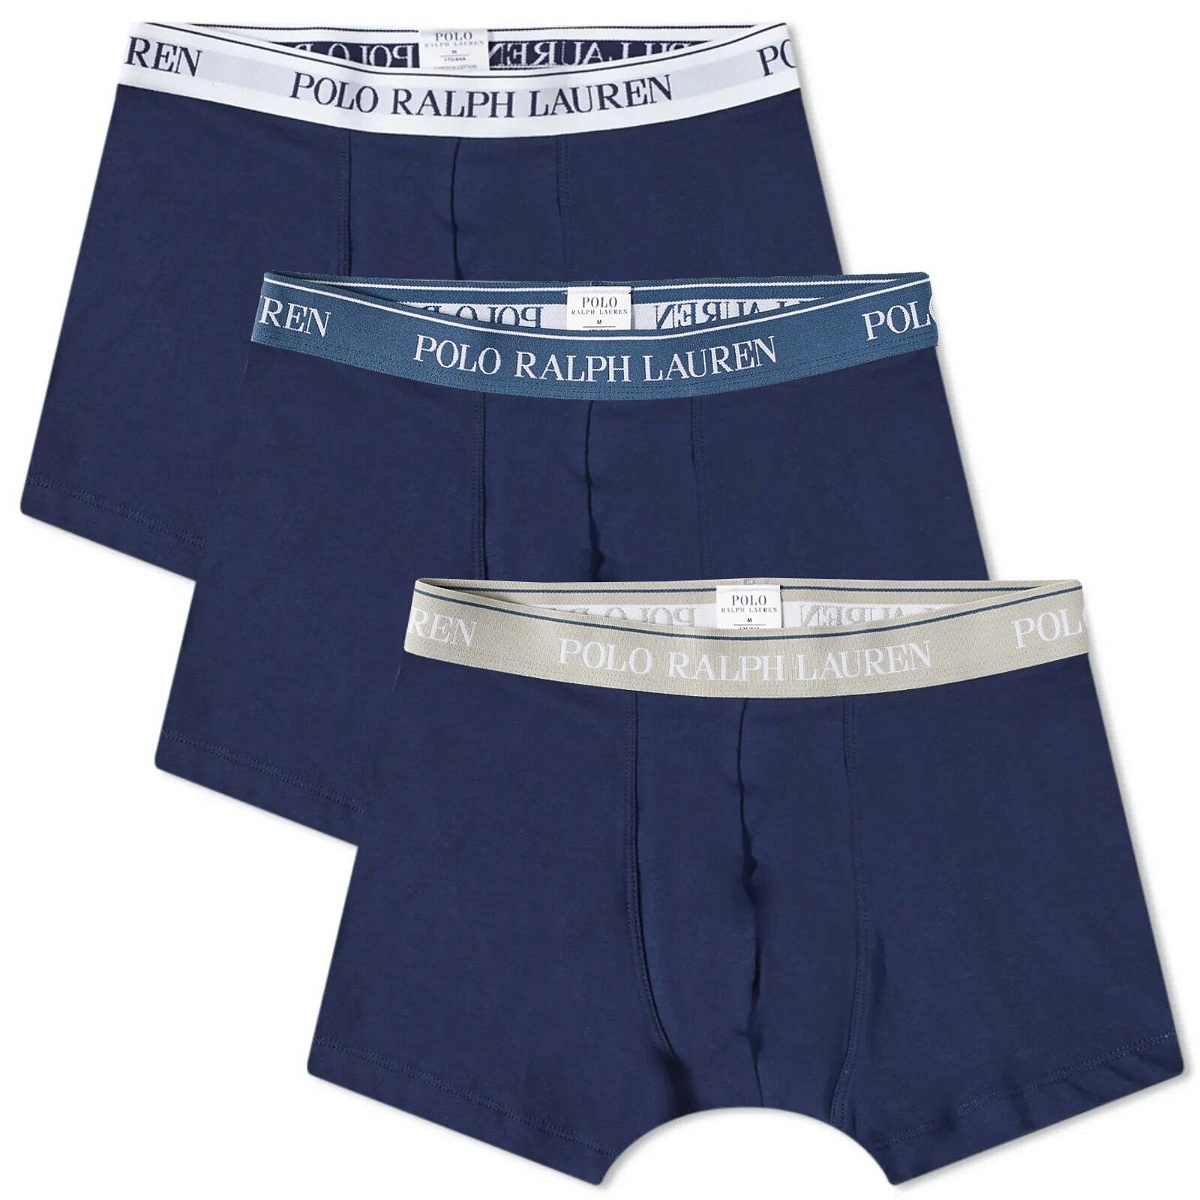 Polo Ralph Lauren Men's Boxer Brief - 3 Pack in Navy Blue/White/Grey Polo  Ralph Lauren